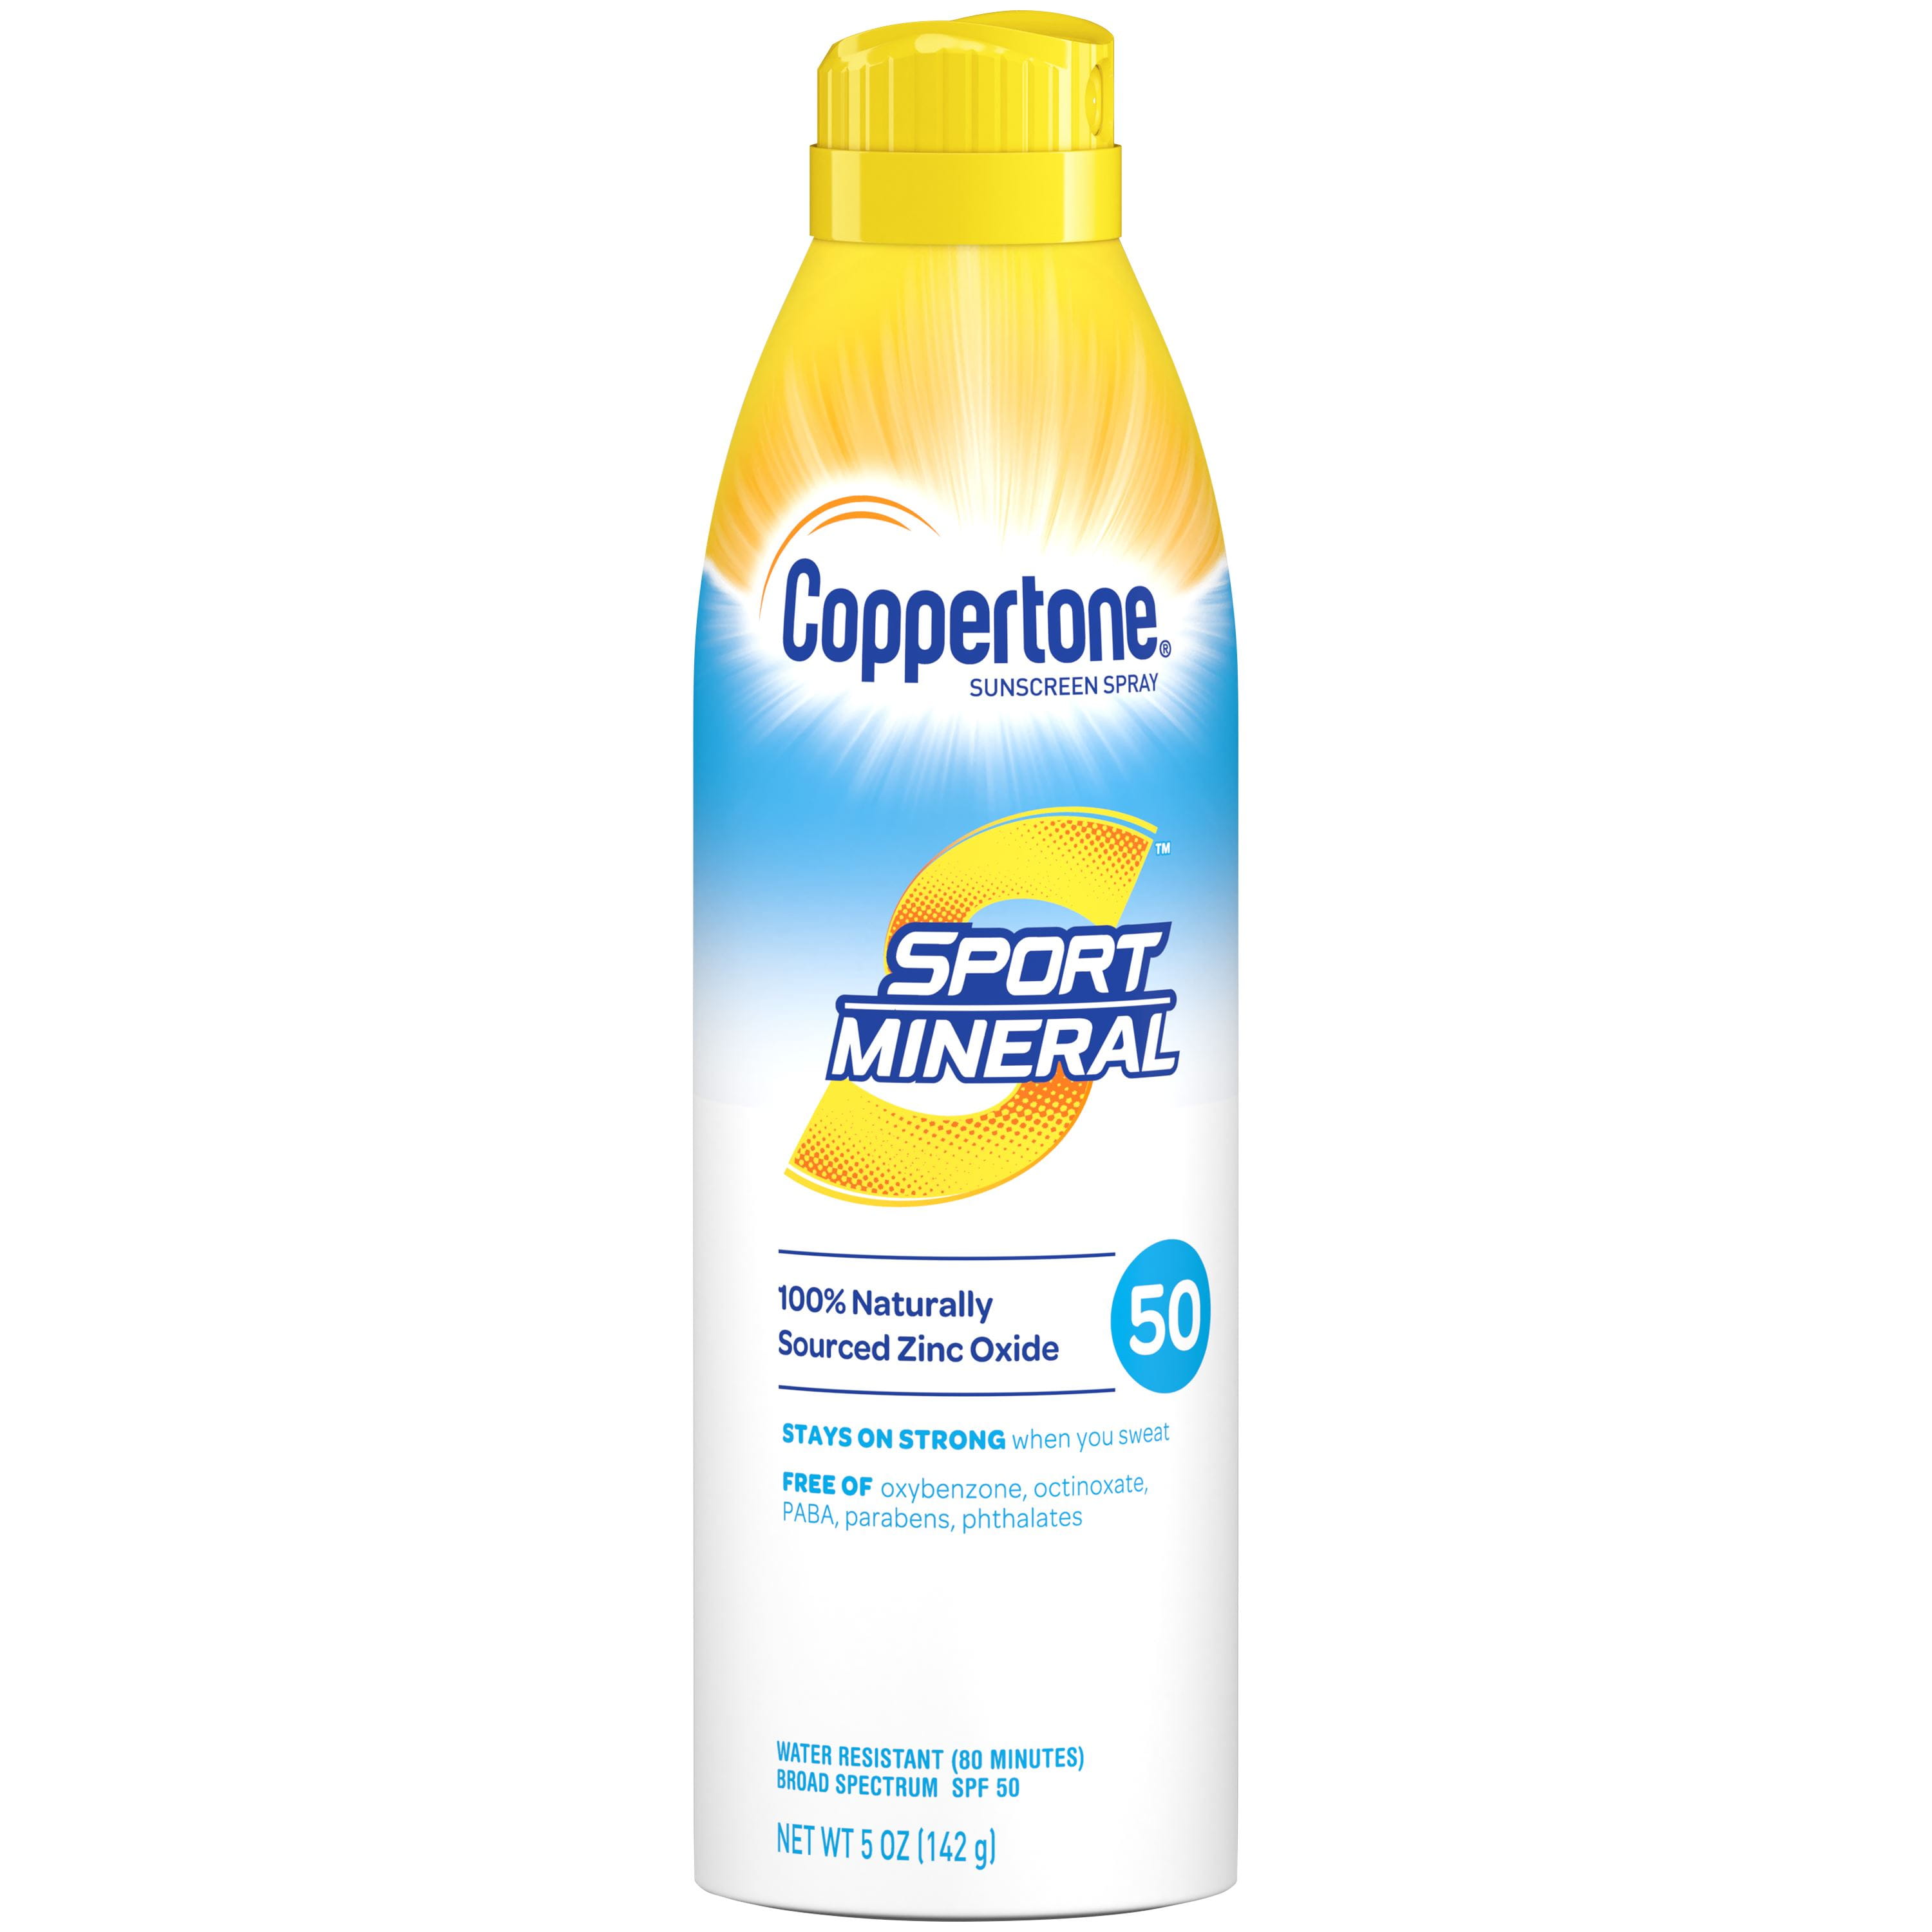 Coppertone Sport Mineral SPF 50 Sunscreen Spray